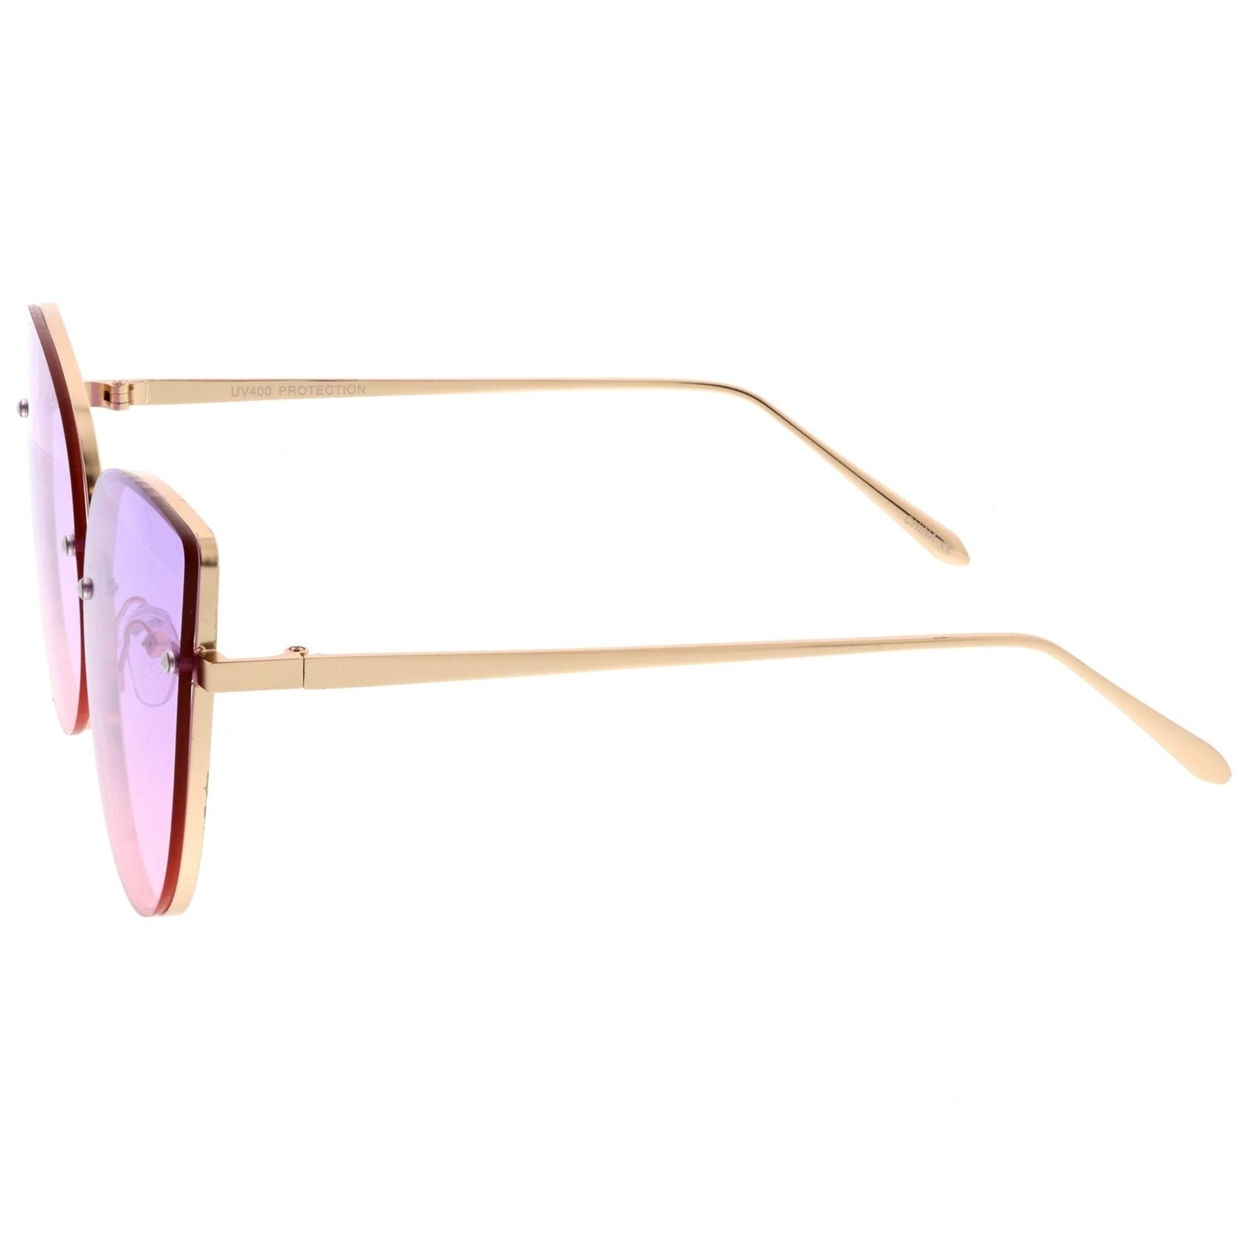 Women's Oversize Slim Metal Rimless Gradient Flat Lens Cat Eye Sunglasses 61mm - Gold / Smoke-Brown